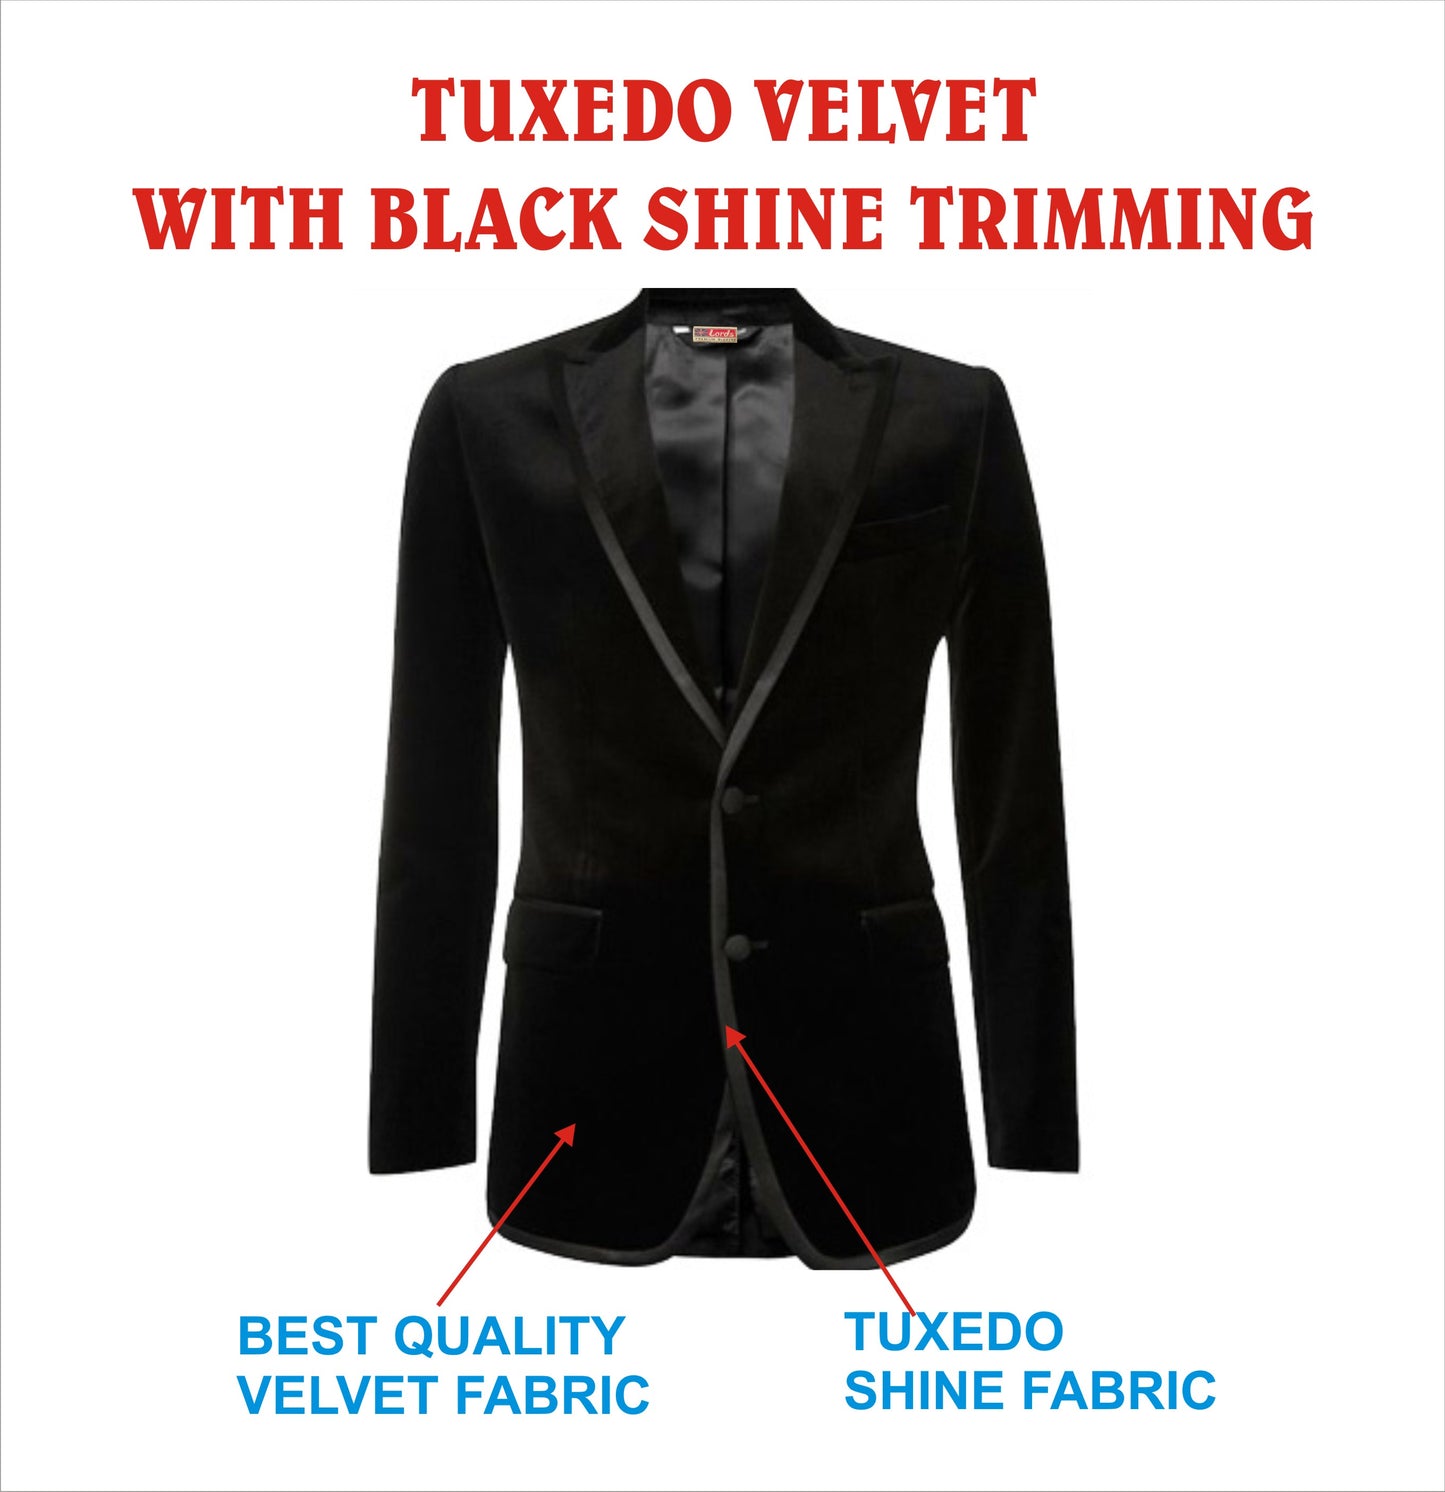 Tuxedo Blazer Men's Velvet Black With Shiny Trimming Price Rs 1550 PER PIECE